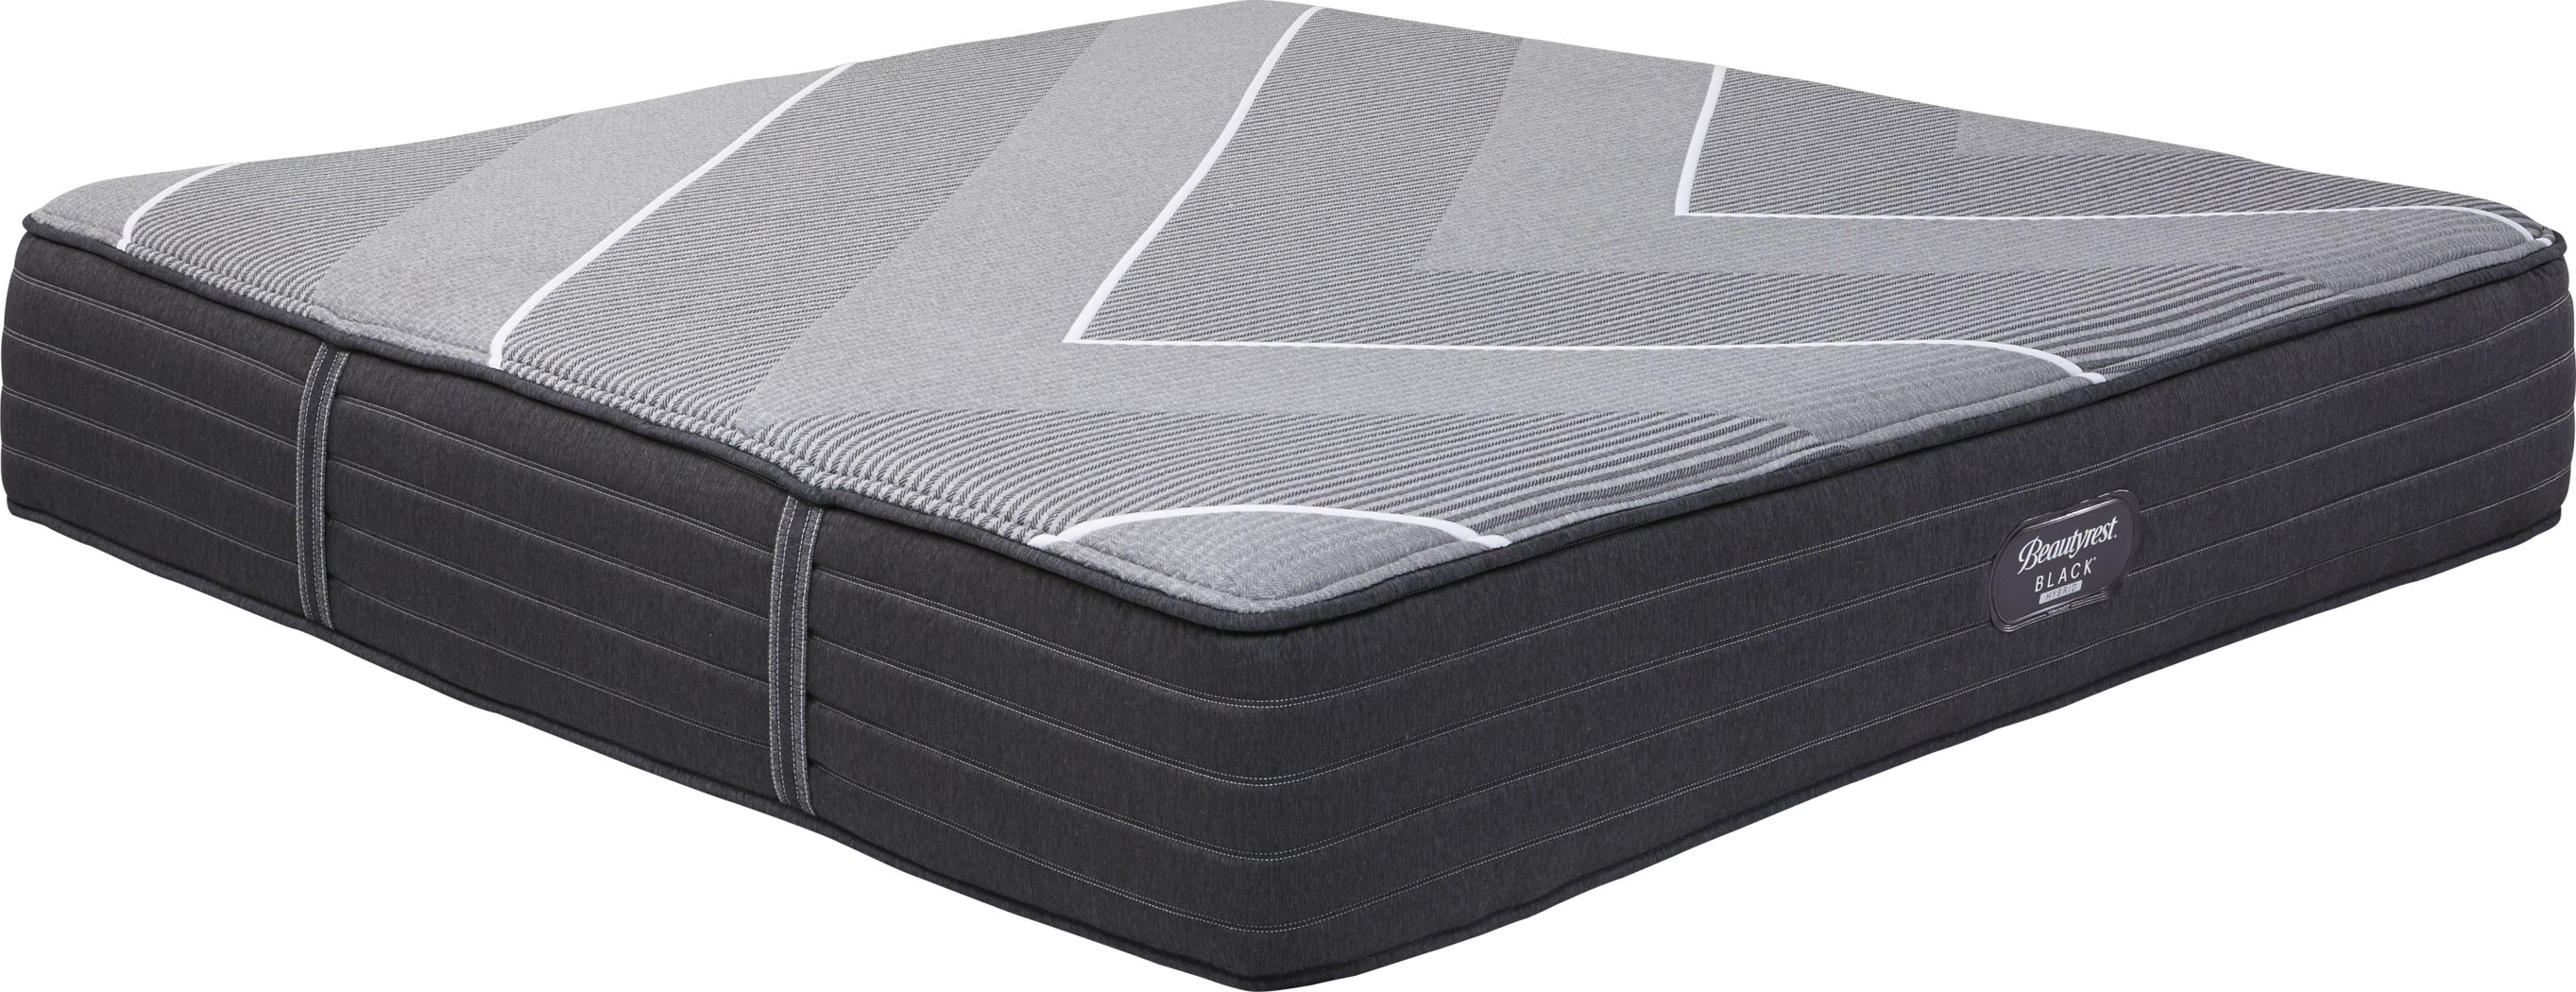 qvc ultra plush king mattress